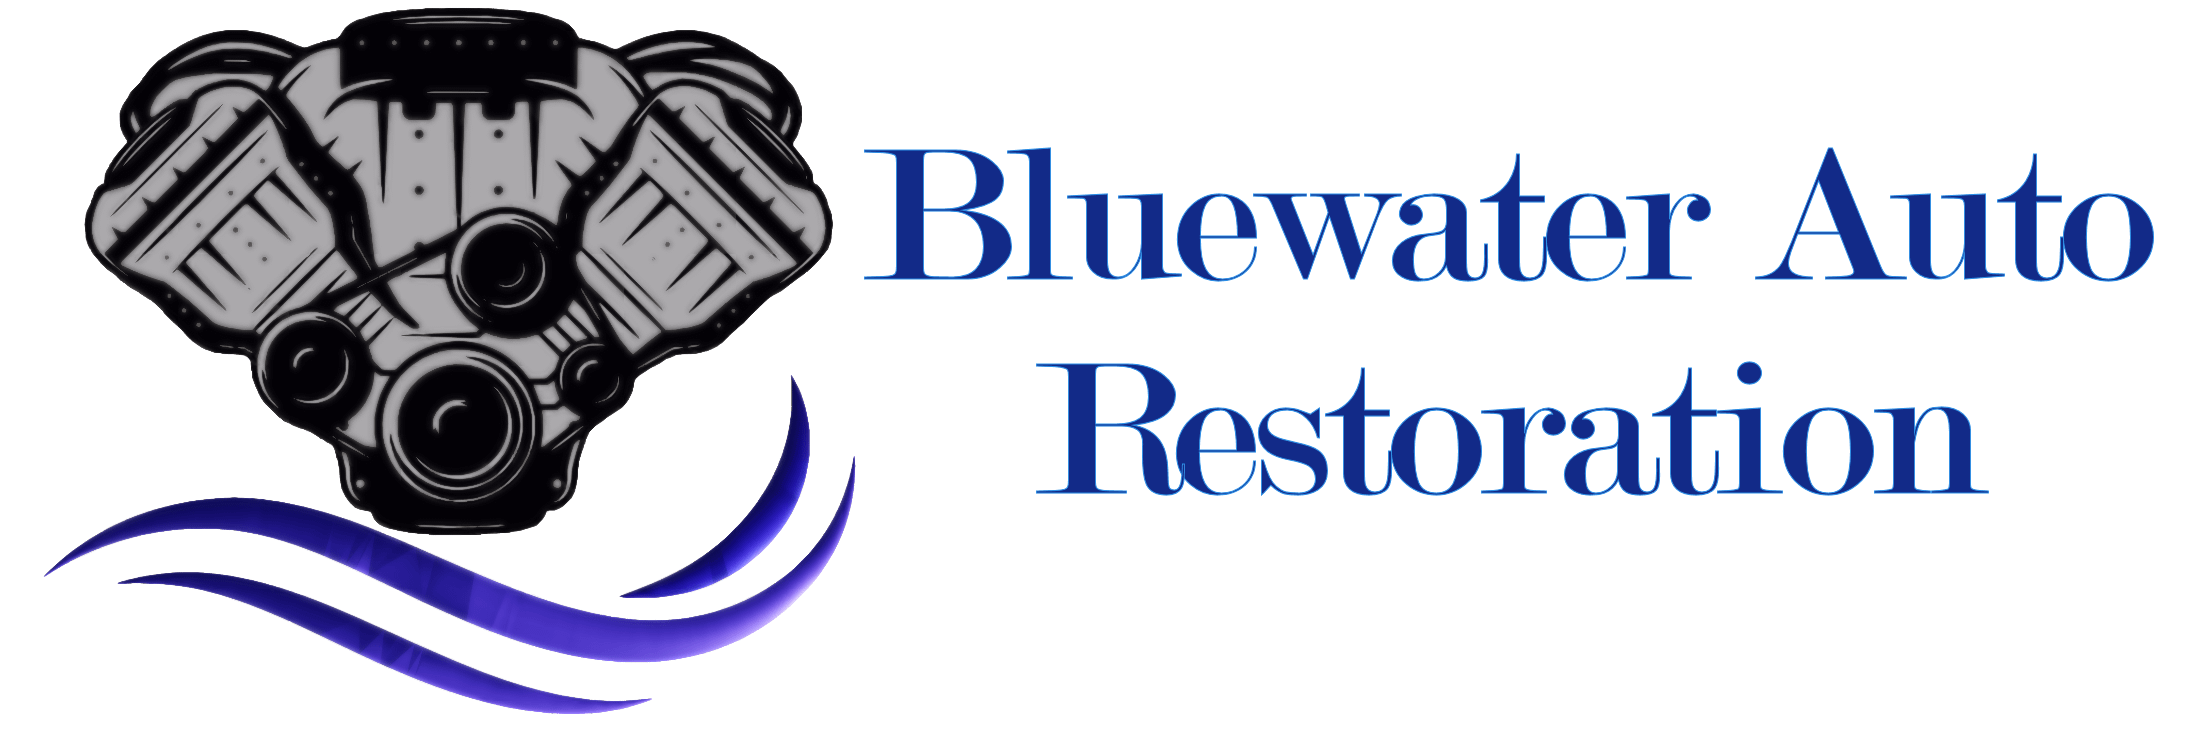 Bluewater Auto Restoration